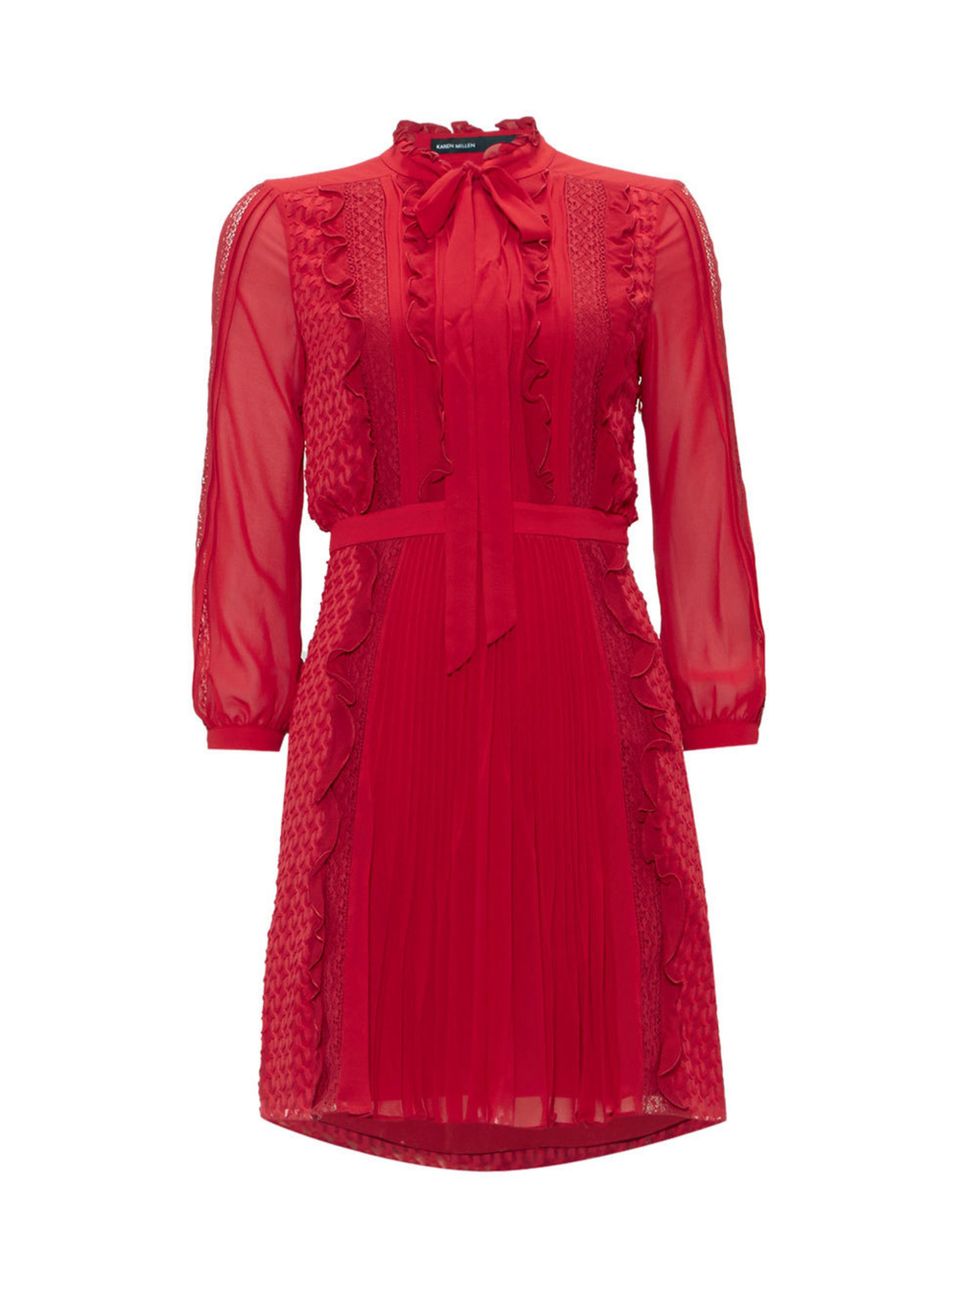 Sleeve, Collar, Dress, Textile, Red, Pattern, Formal wear, Maroon, One-piece garment, Carmine, 